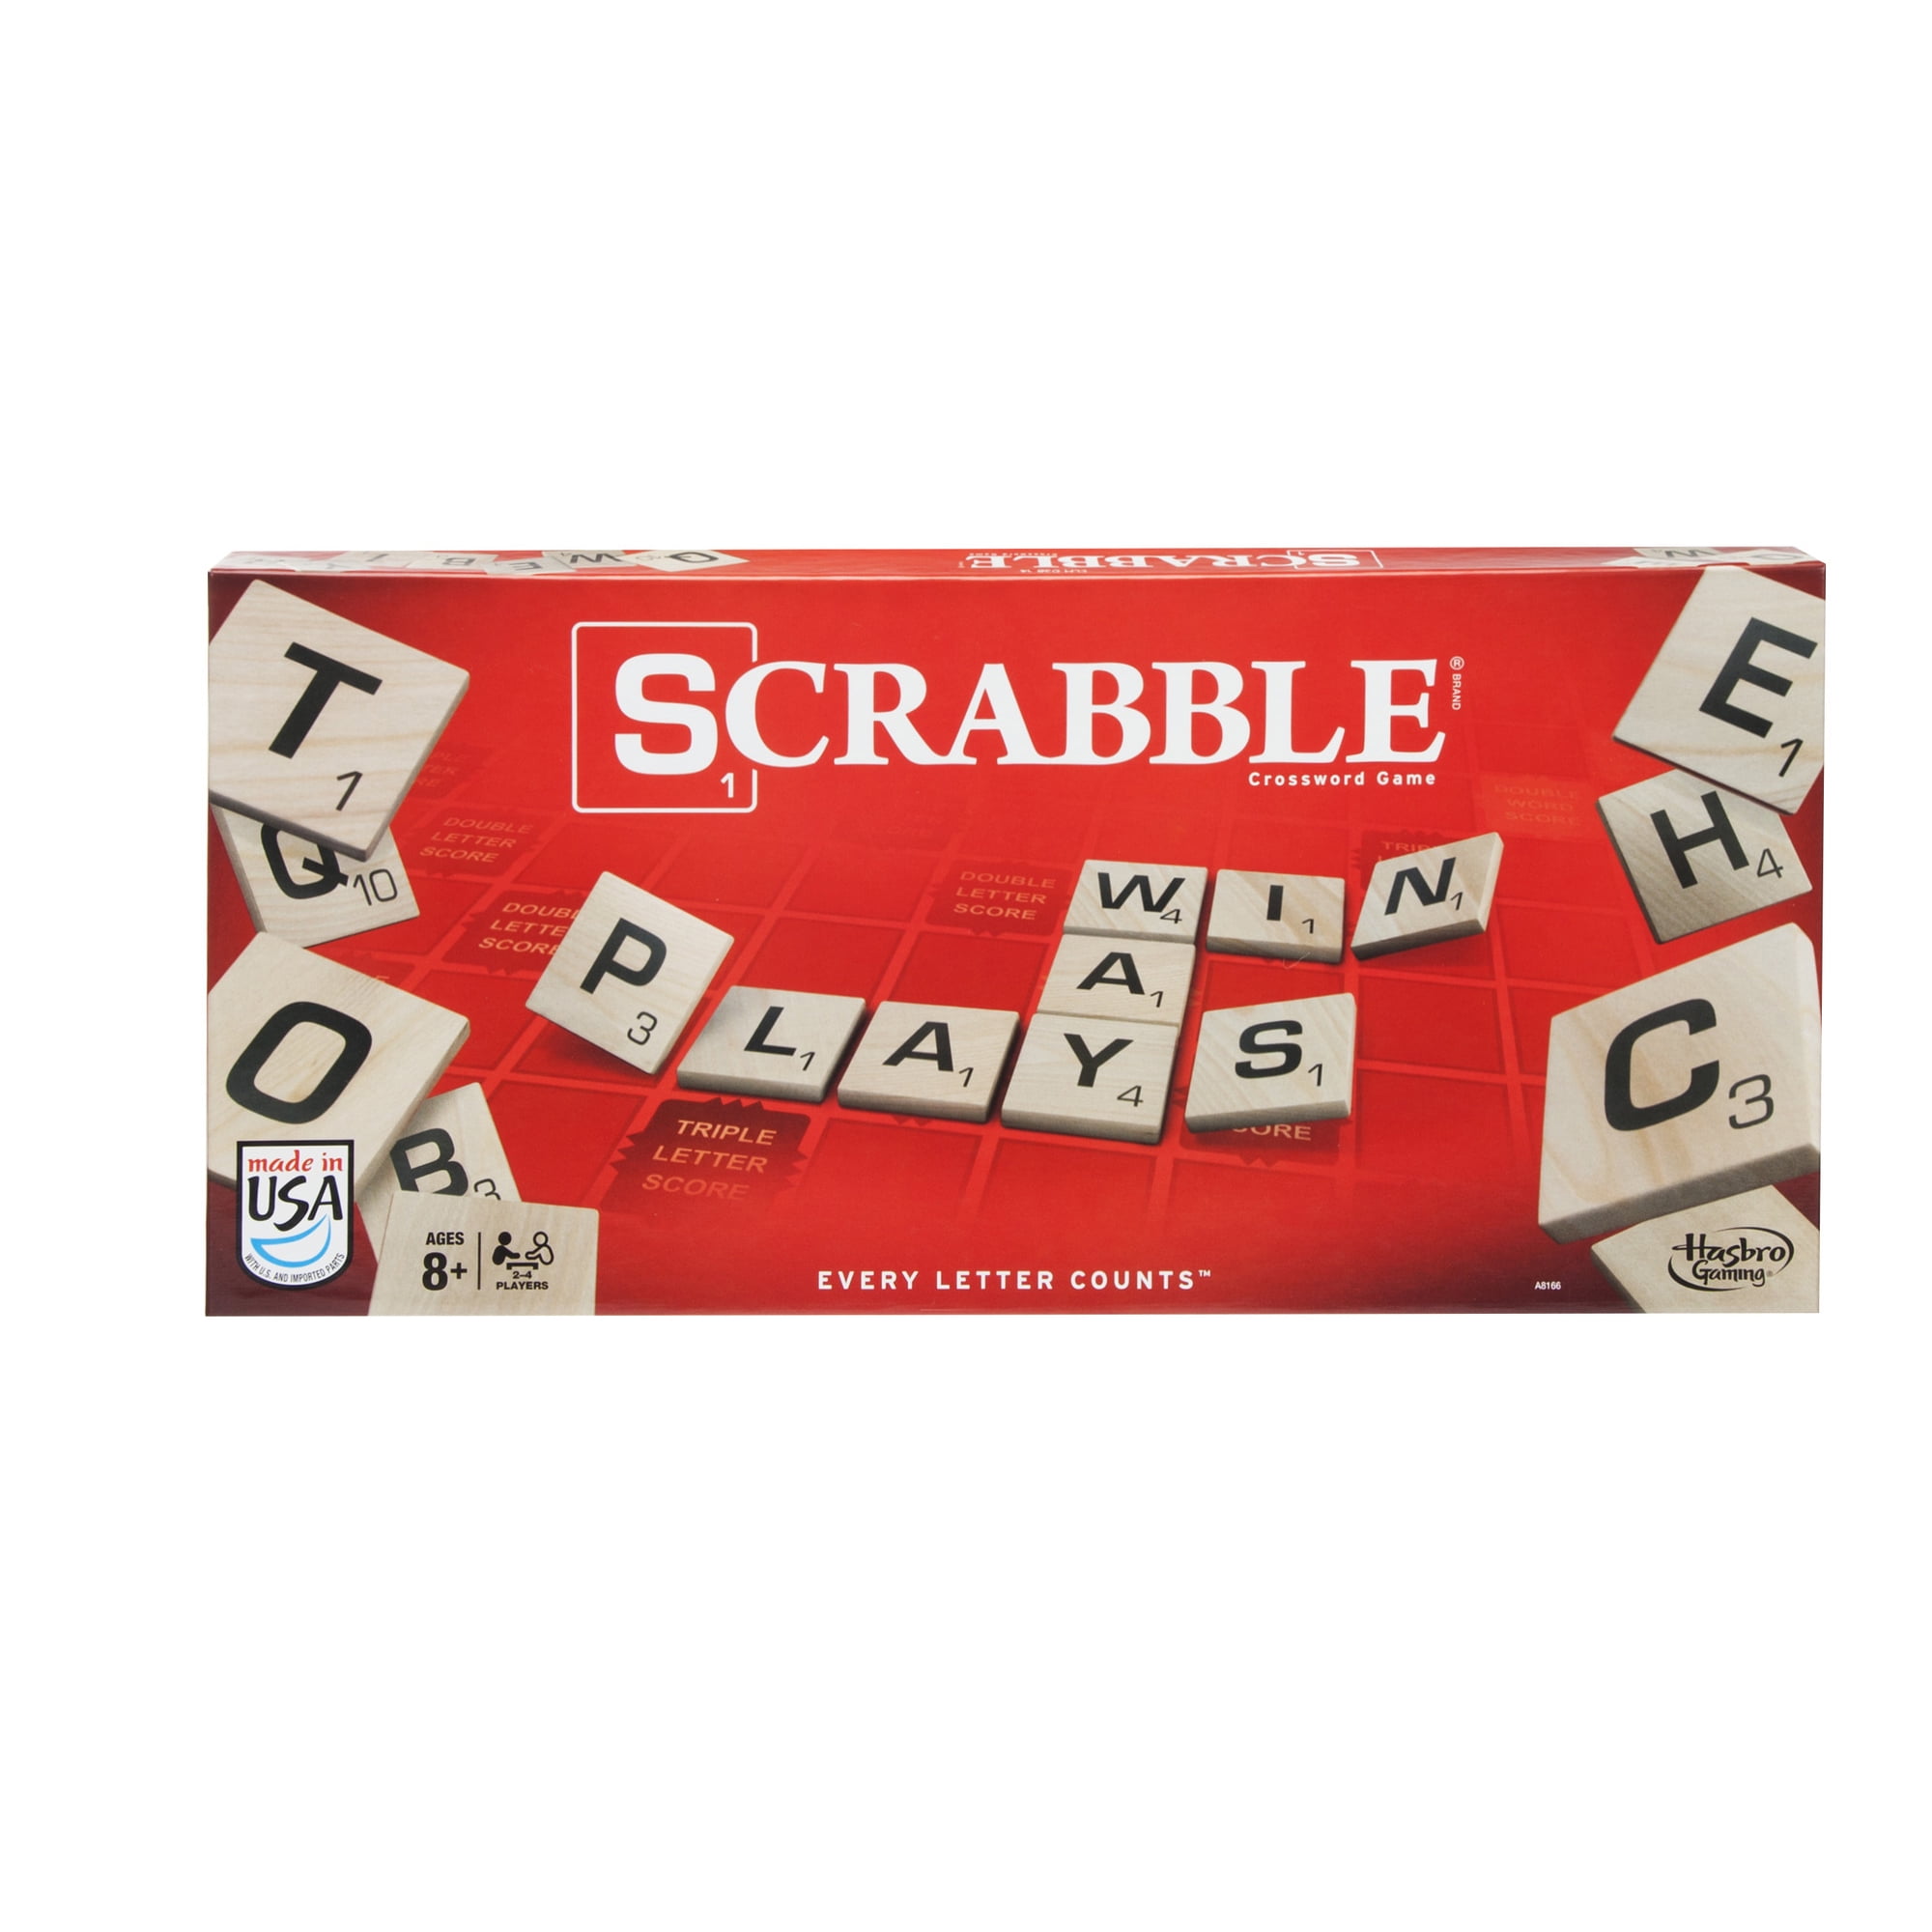 Hasbro Collectors Edition Scrabble Board Game Blue Tin for sale online 